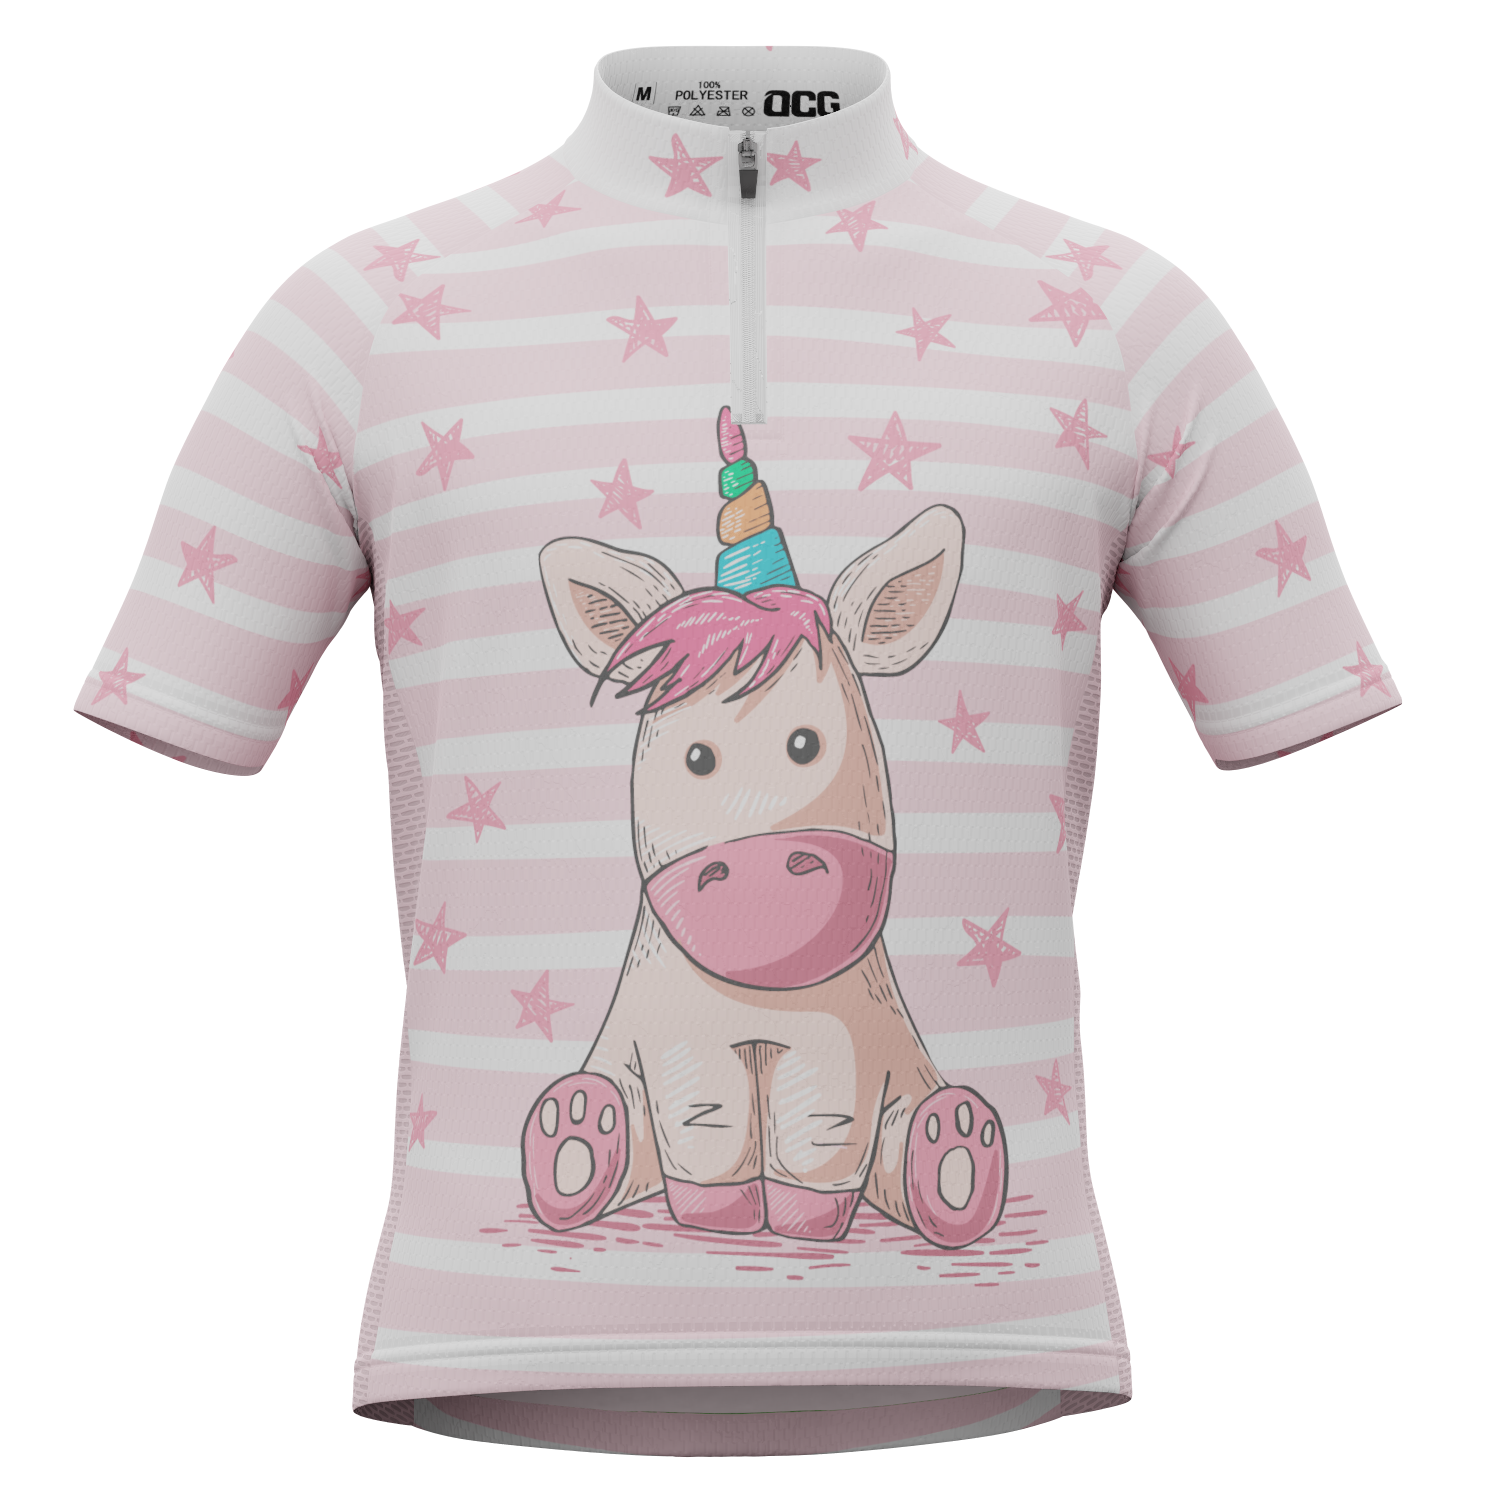 Kid's Pondering Unicorn Short Sleeve Cycling Jersey